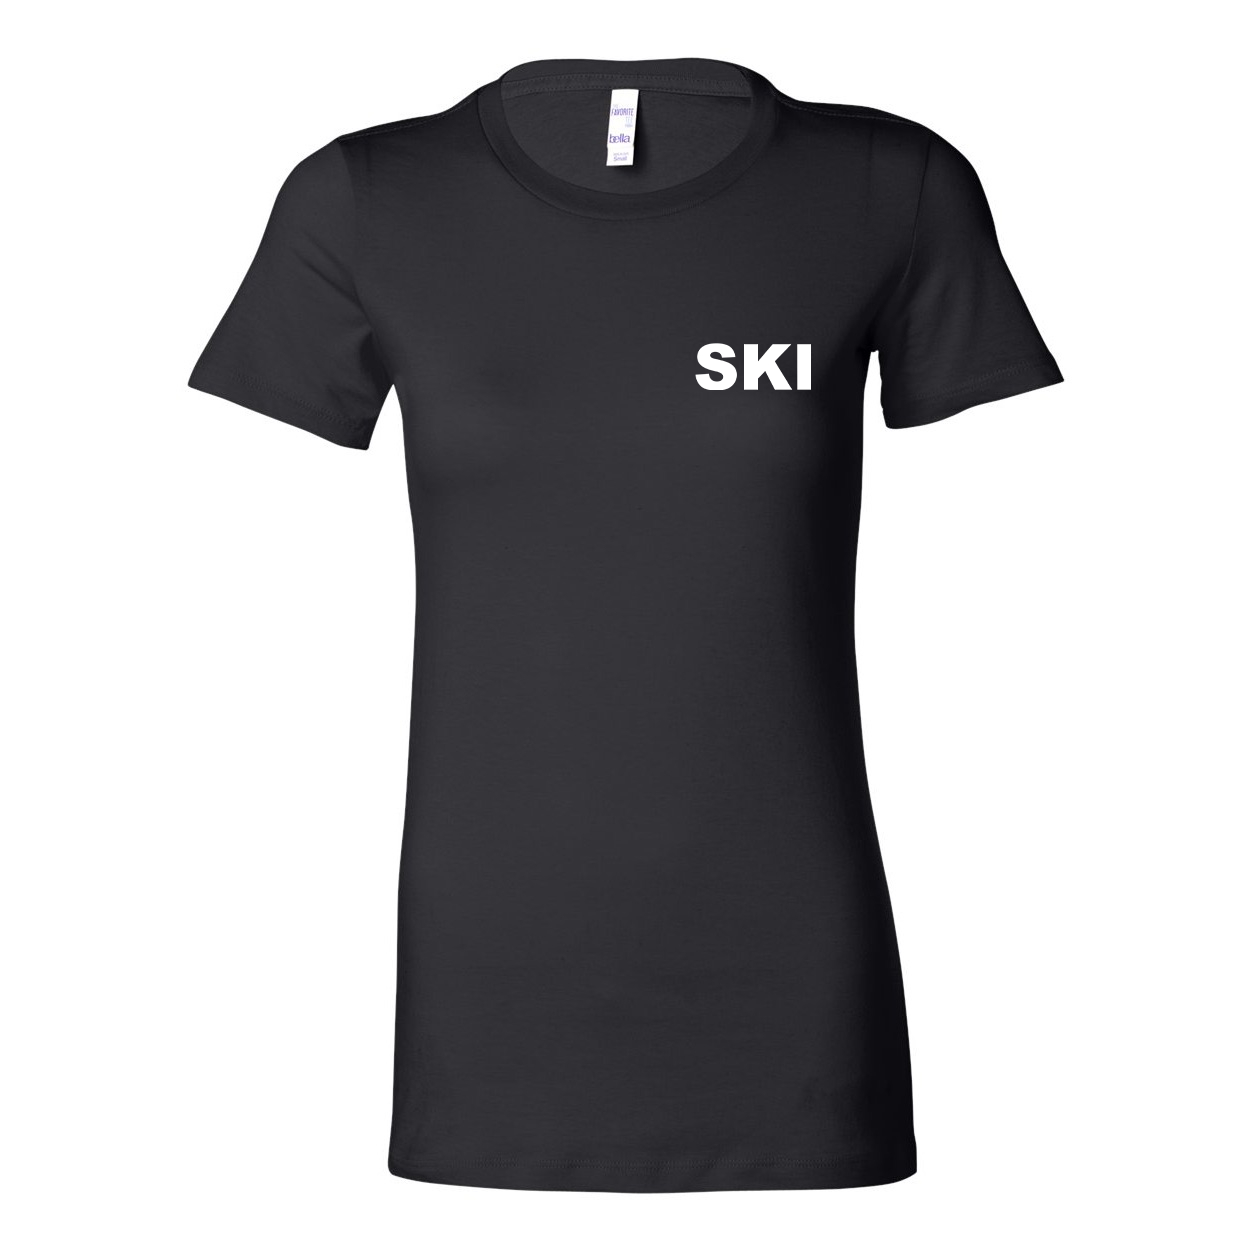 Ski Brand Logo Women's Night Out Fitted Tri-Blend T-Shirt Black (White Logo)